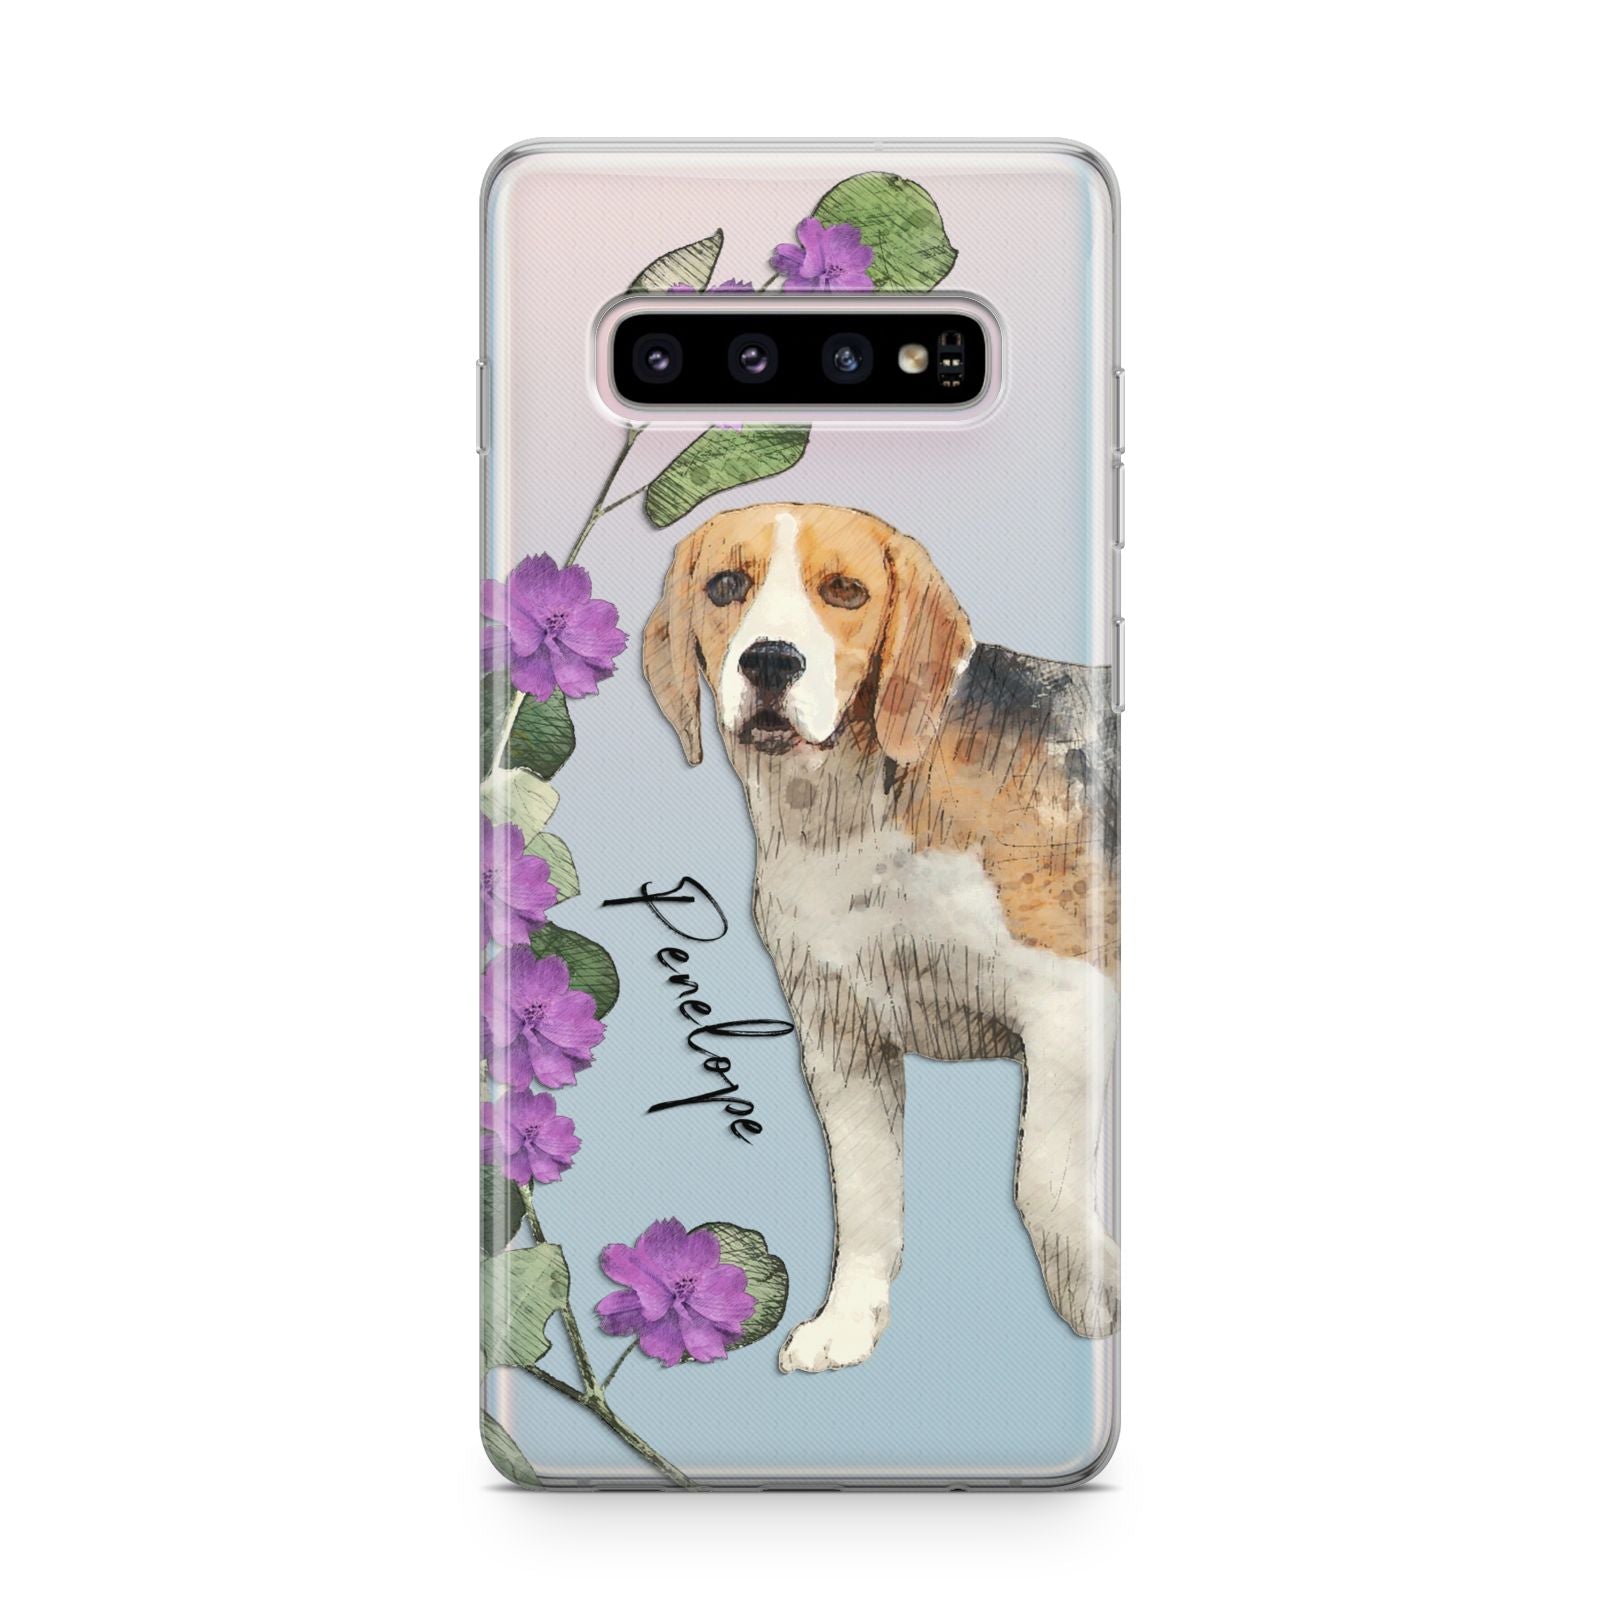 Personalised Dog Samsung Galaxy S10 Plus Case